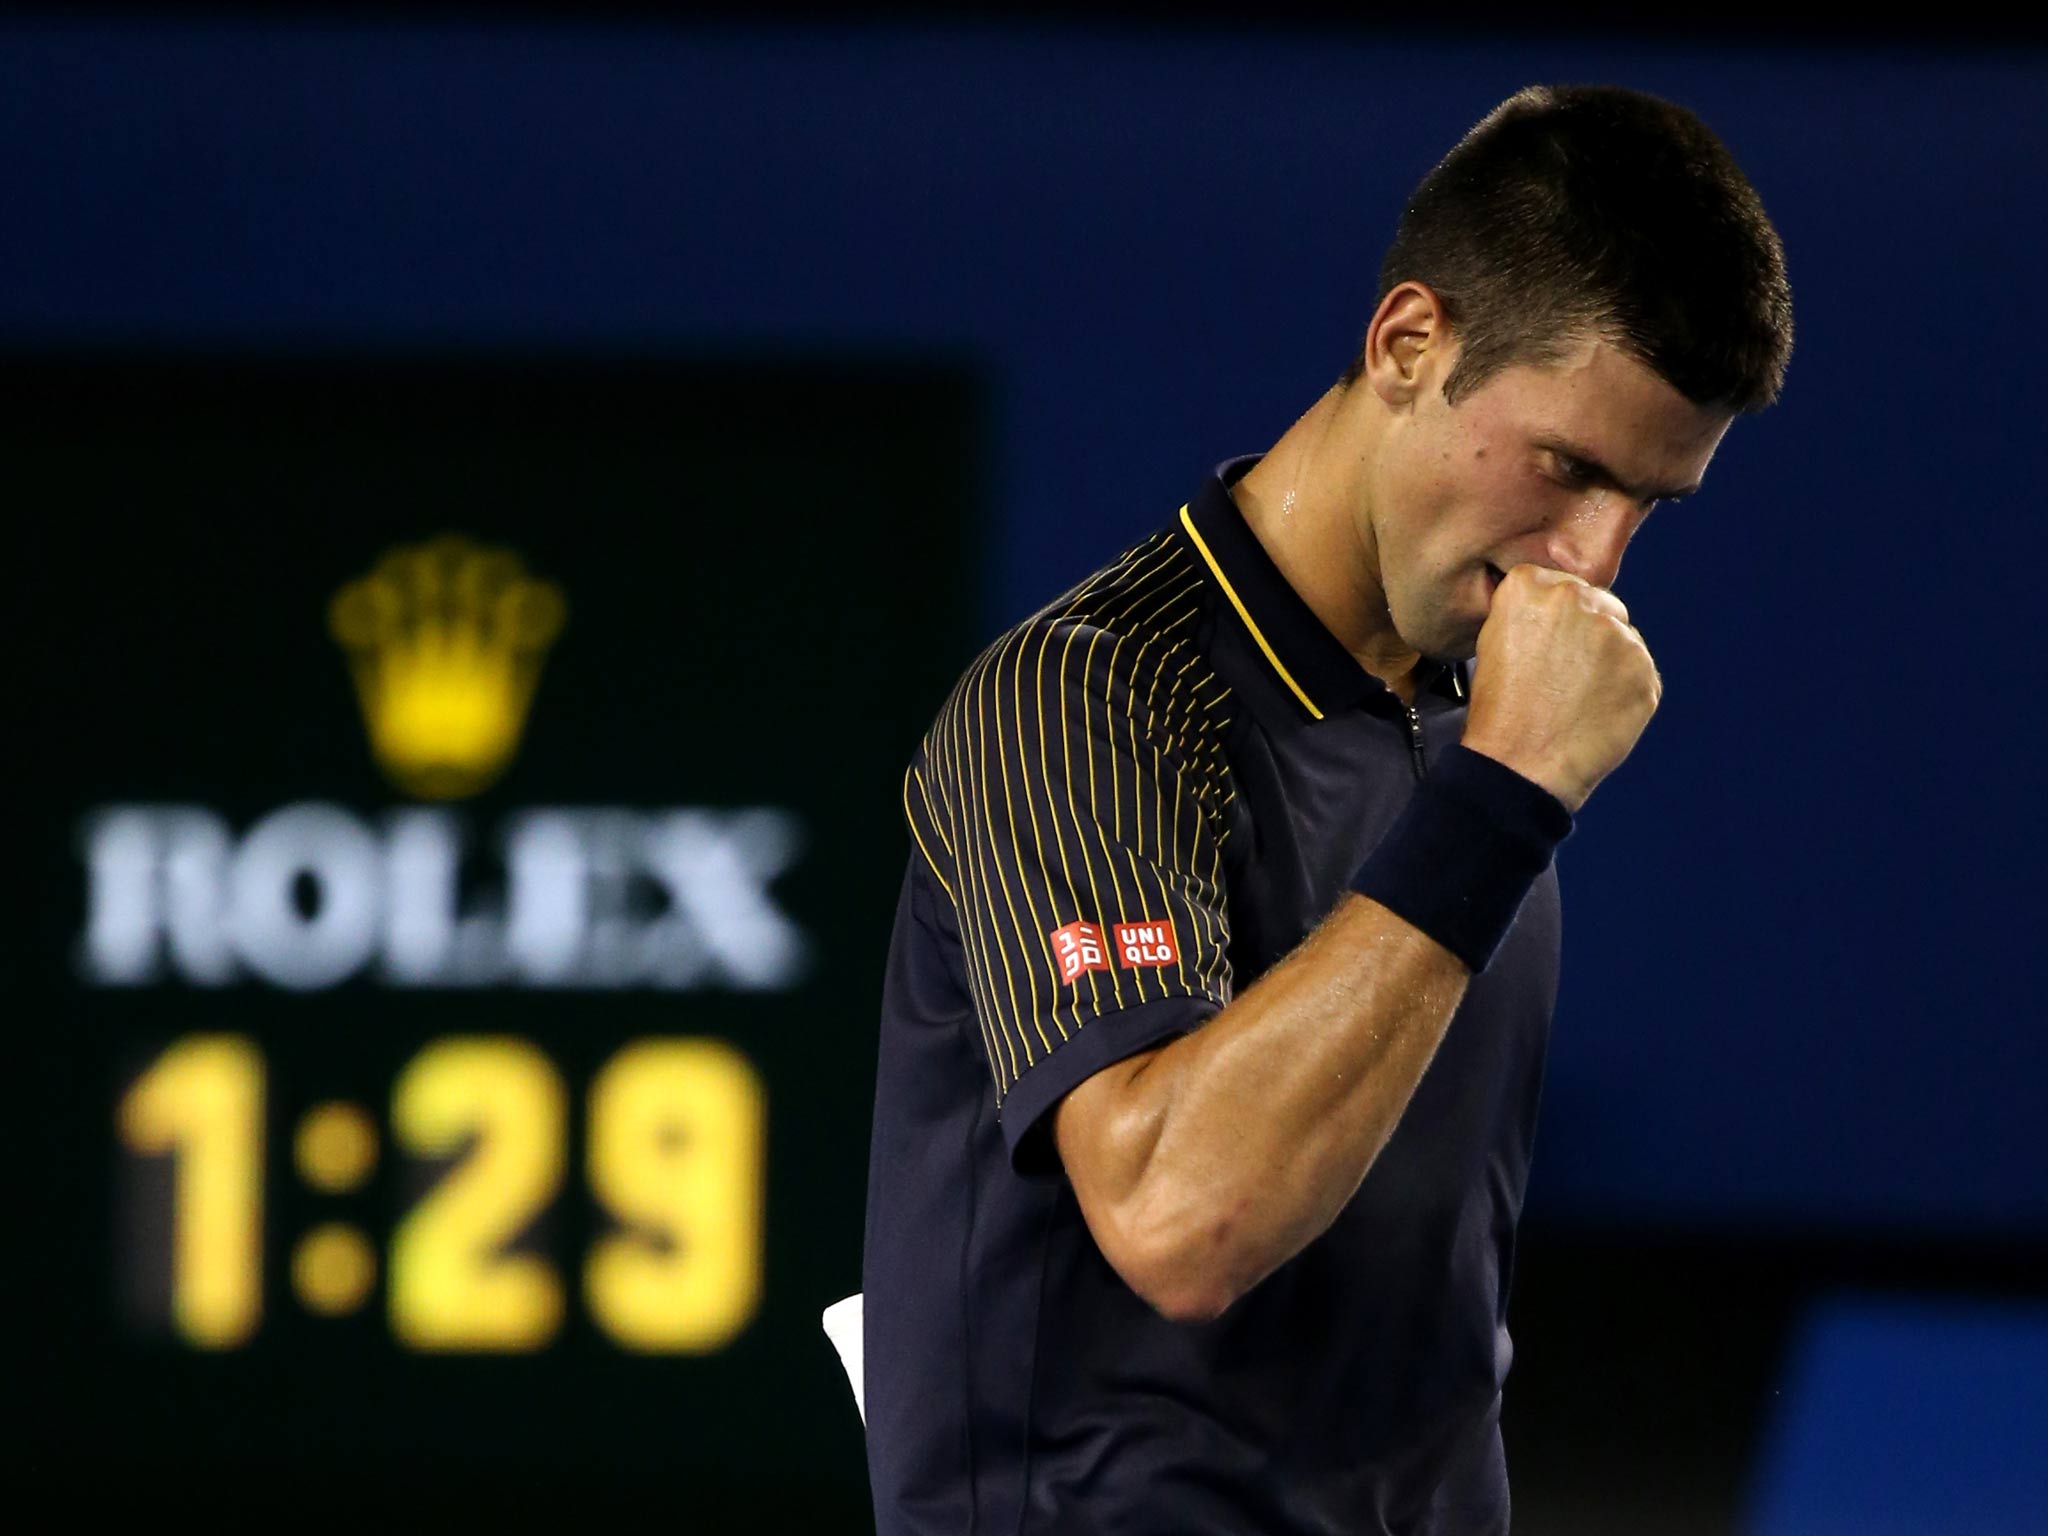 Novak Djokovic raced into the Australian Open final with victory over David Ferrer